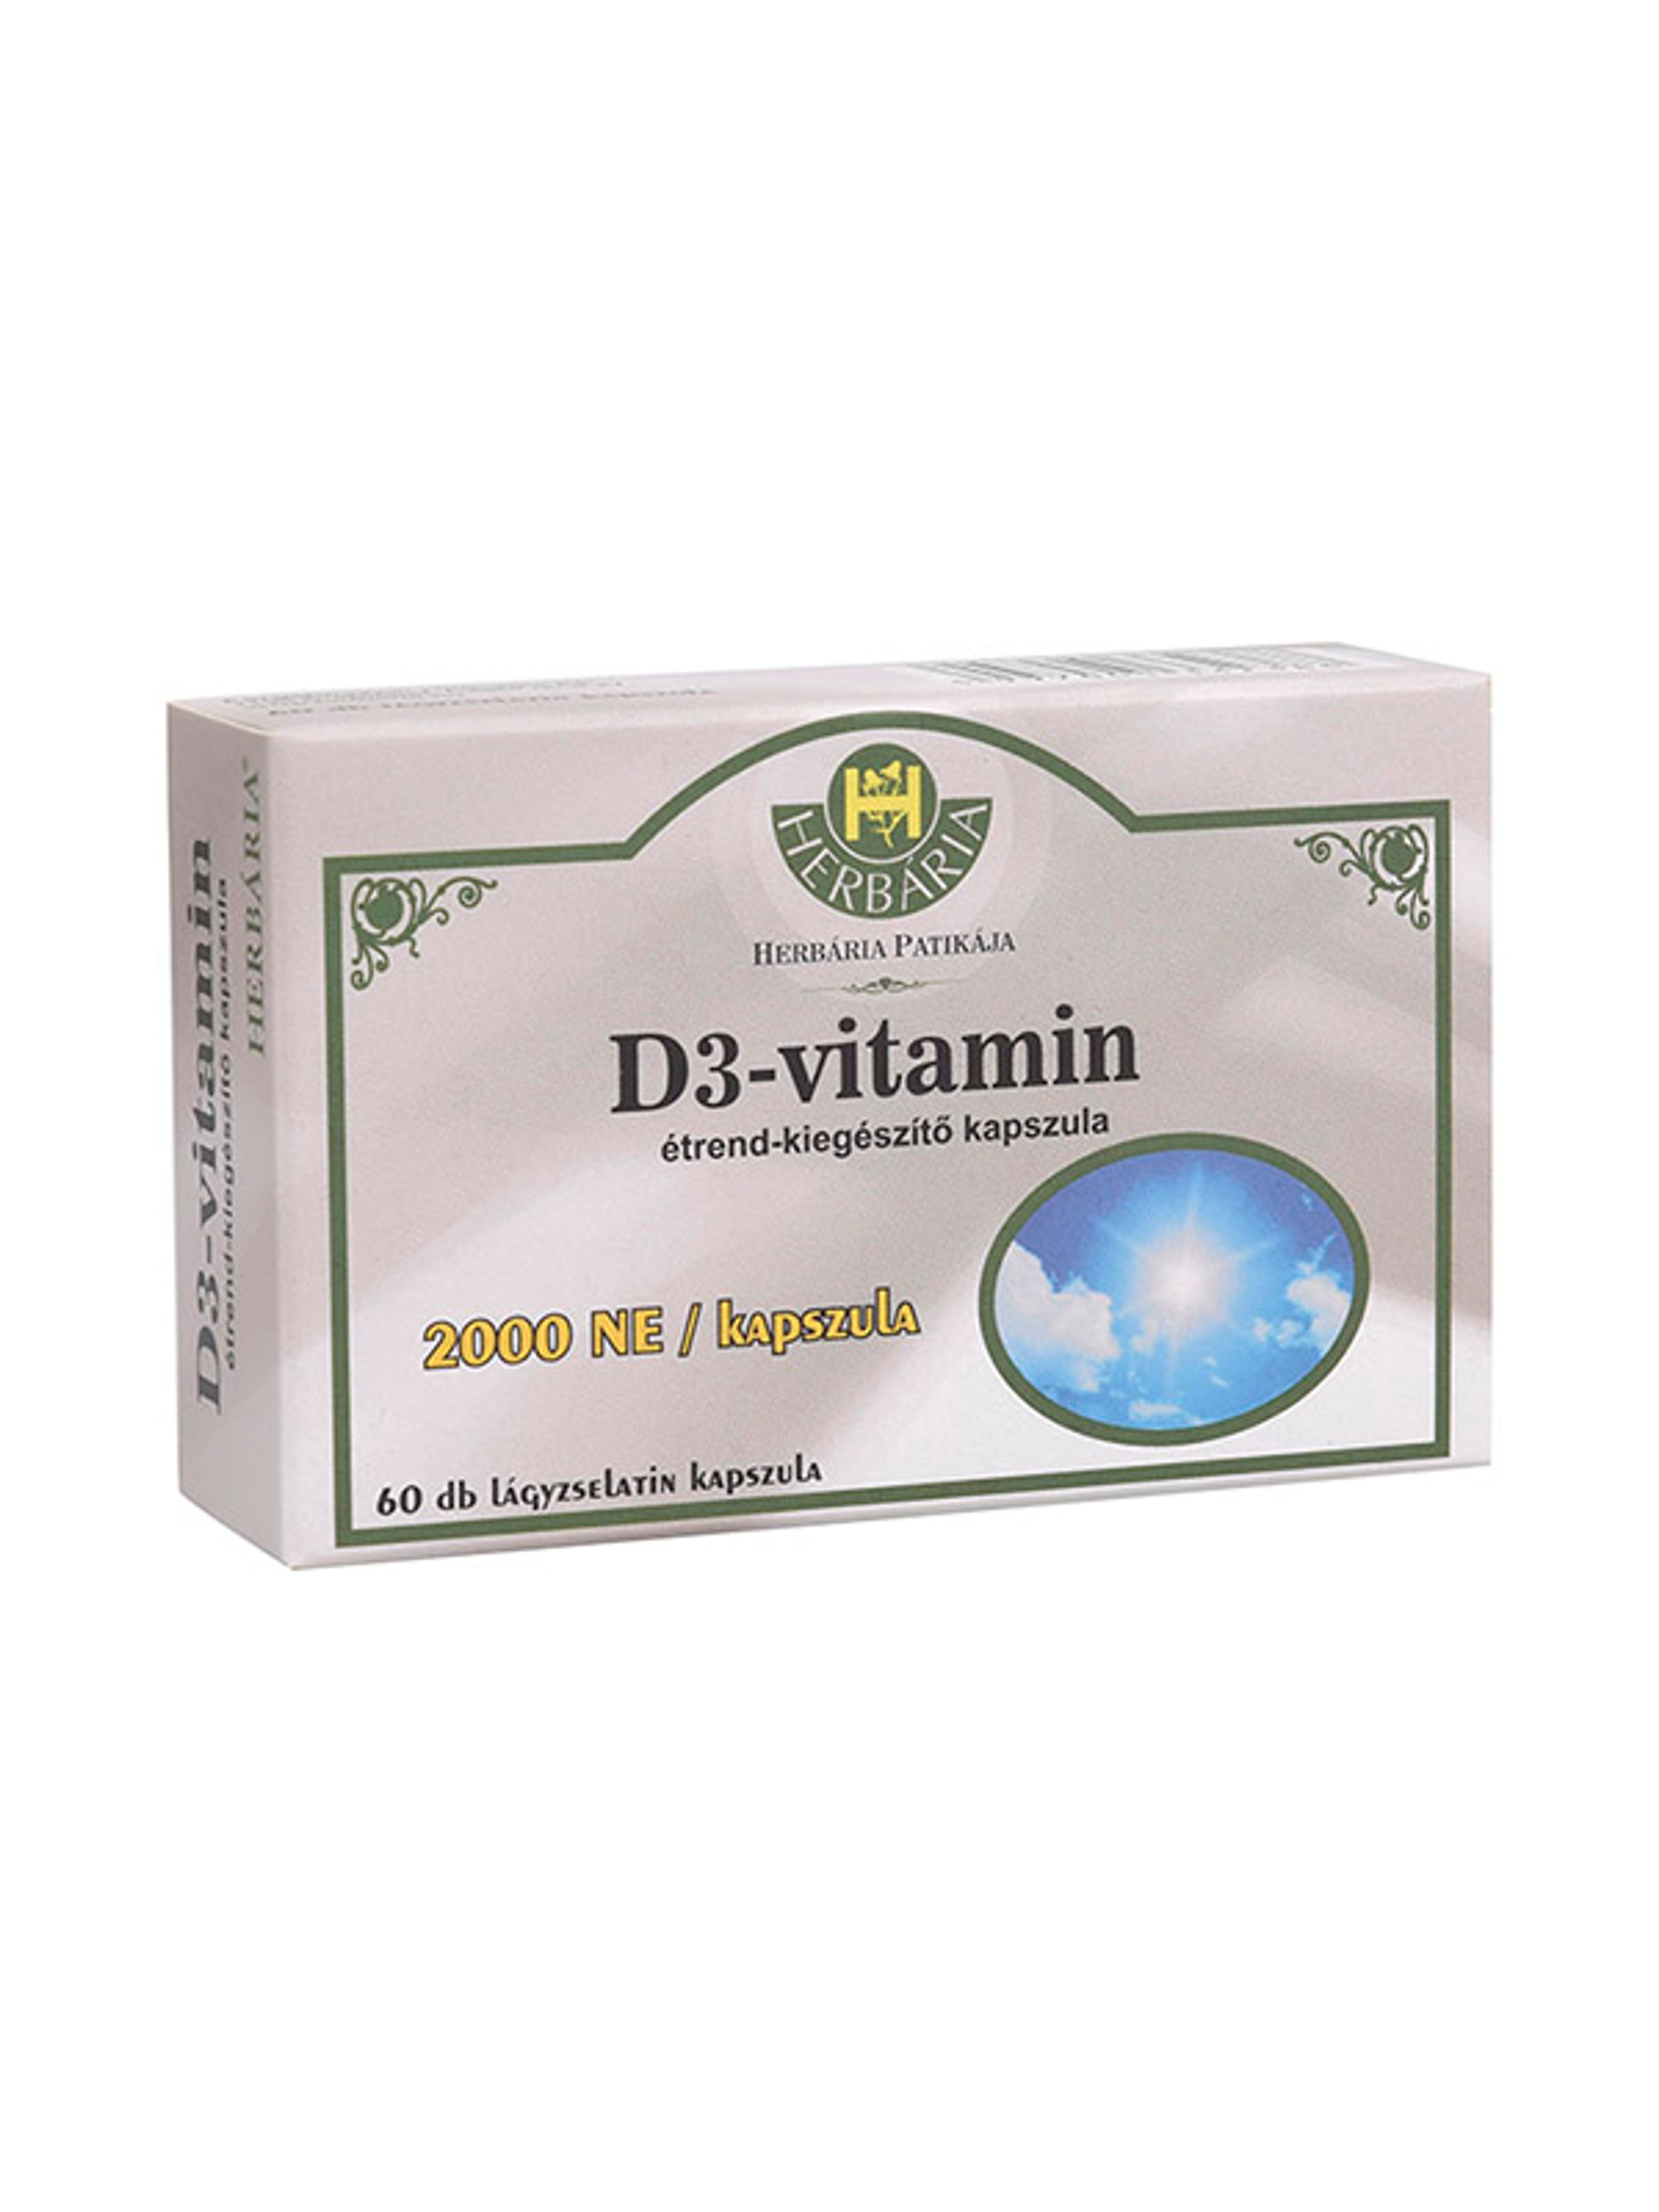 Herbavita D3-vitamin 2000Ne kapszula - 60 db-1